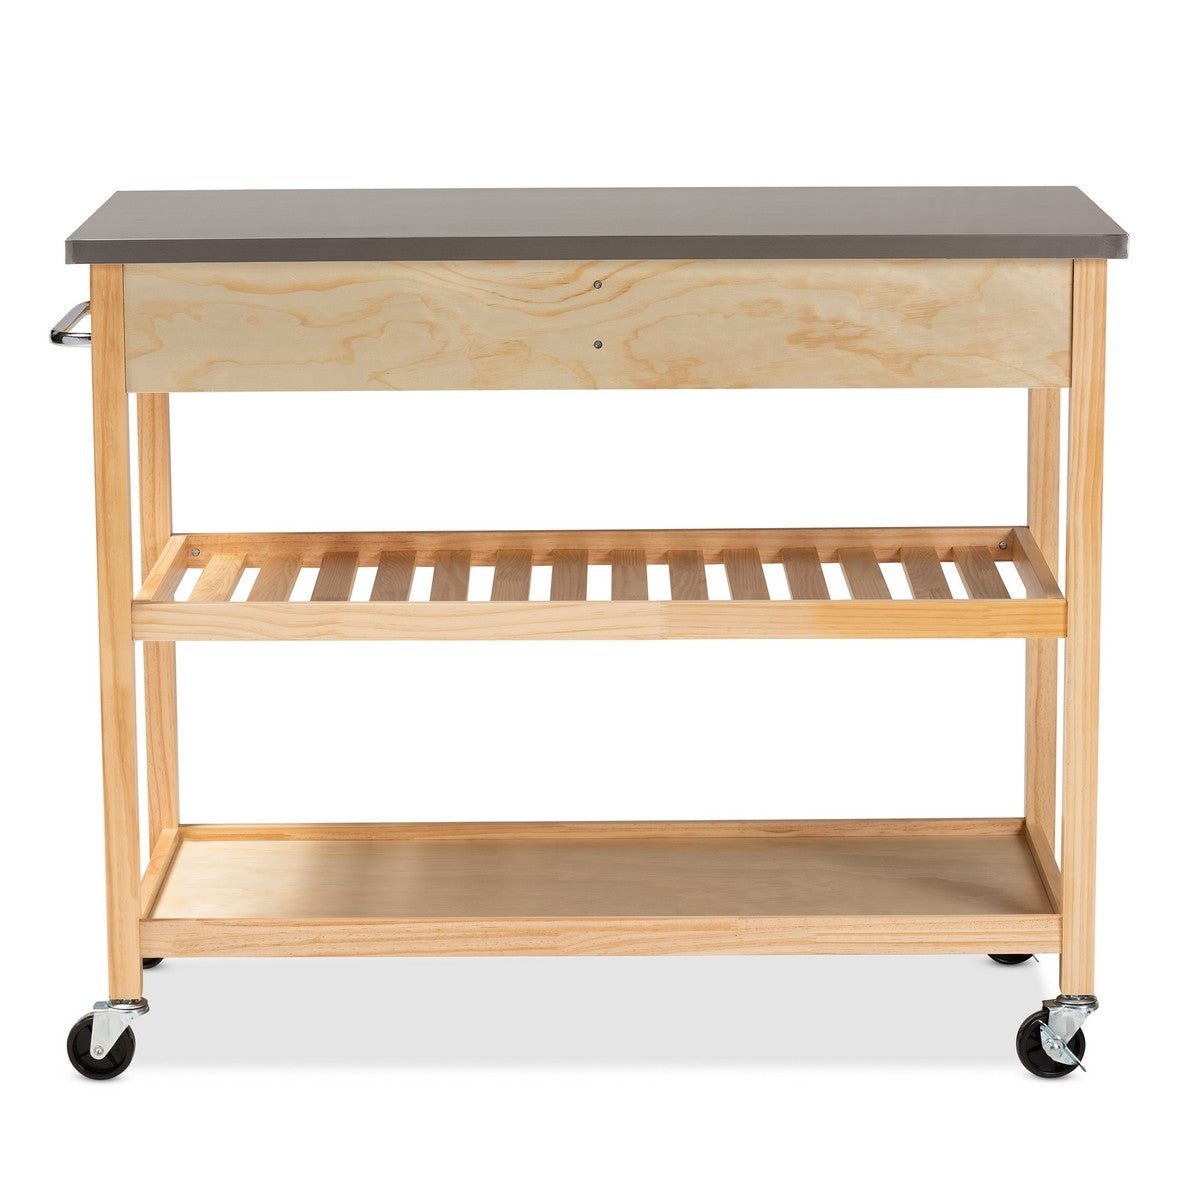 Baxton Studio Cresta Modern and Contemporary Pine Wood and Stainless Steel 2-Drawer Kitchen Island Utility Storage Cart